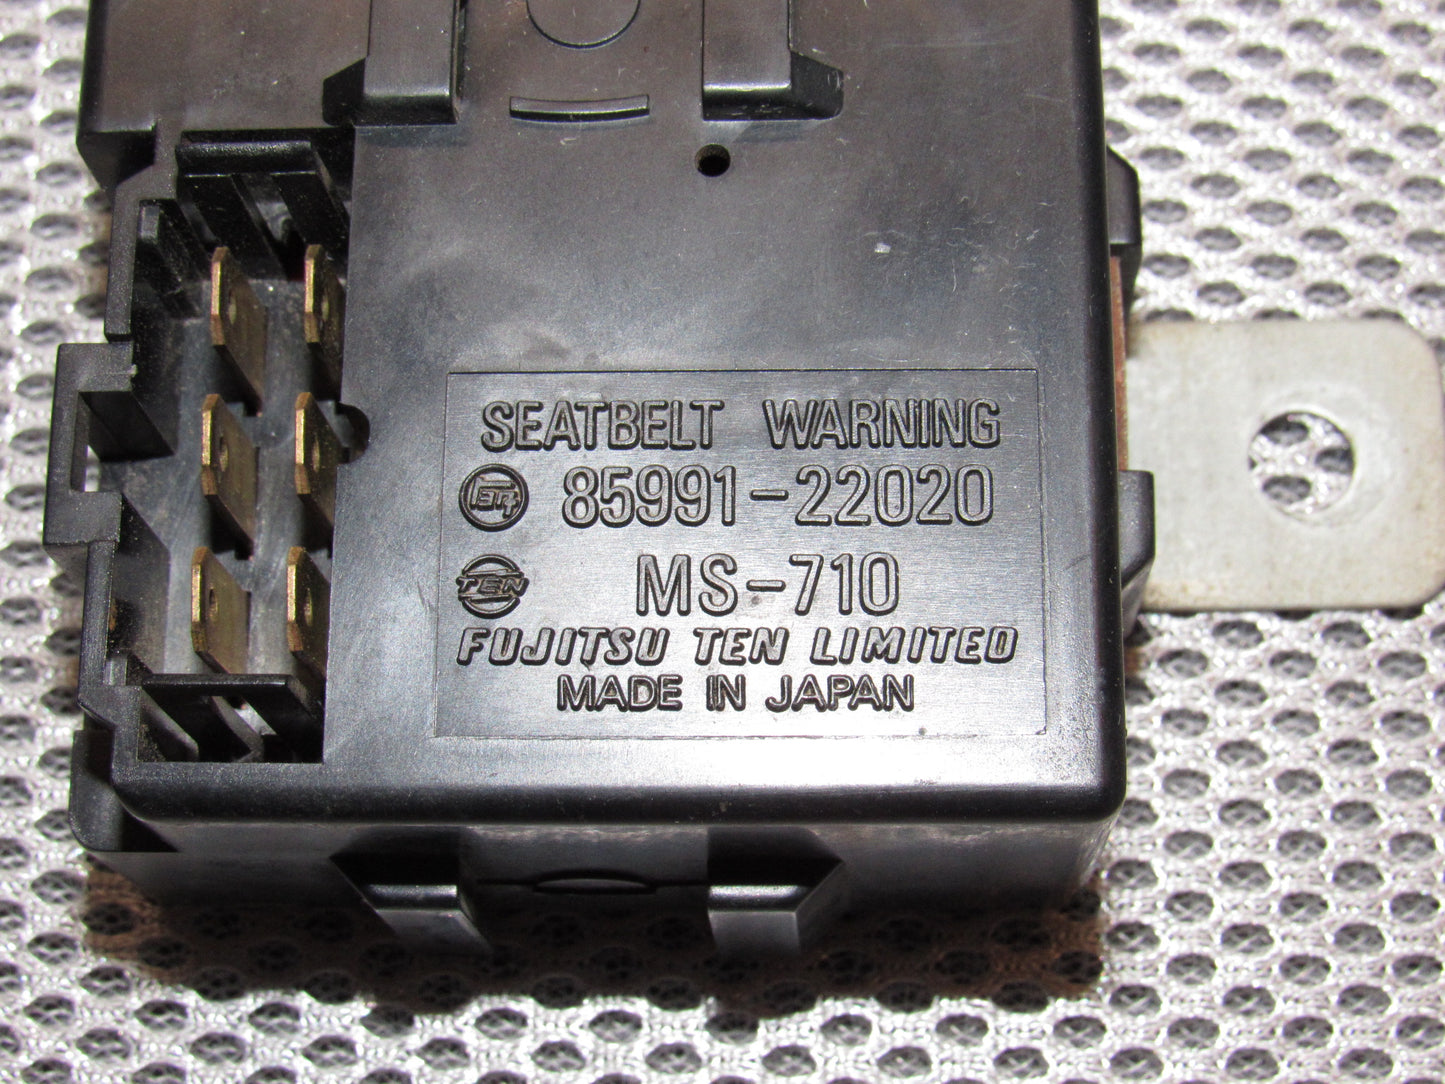 82 83 84 85 Toyota Supra OEM Seatbelt Warning Control Unit Module 85991-22020